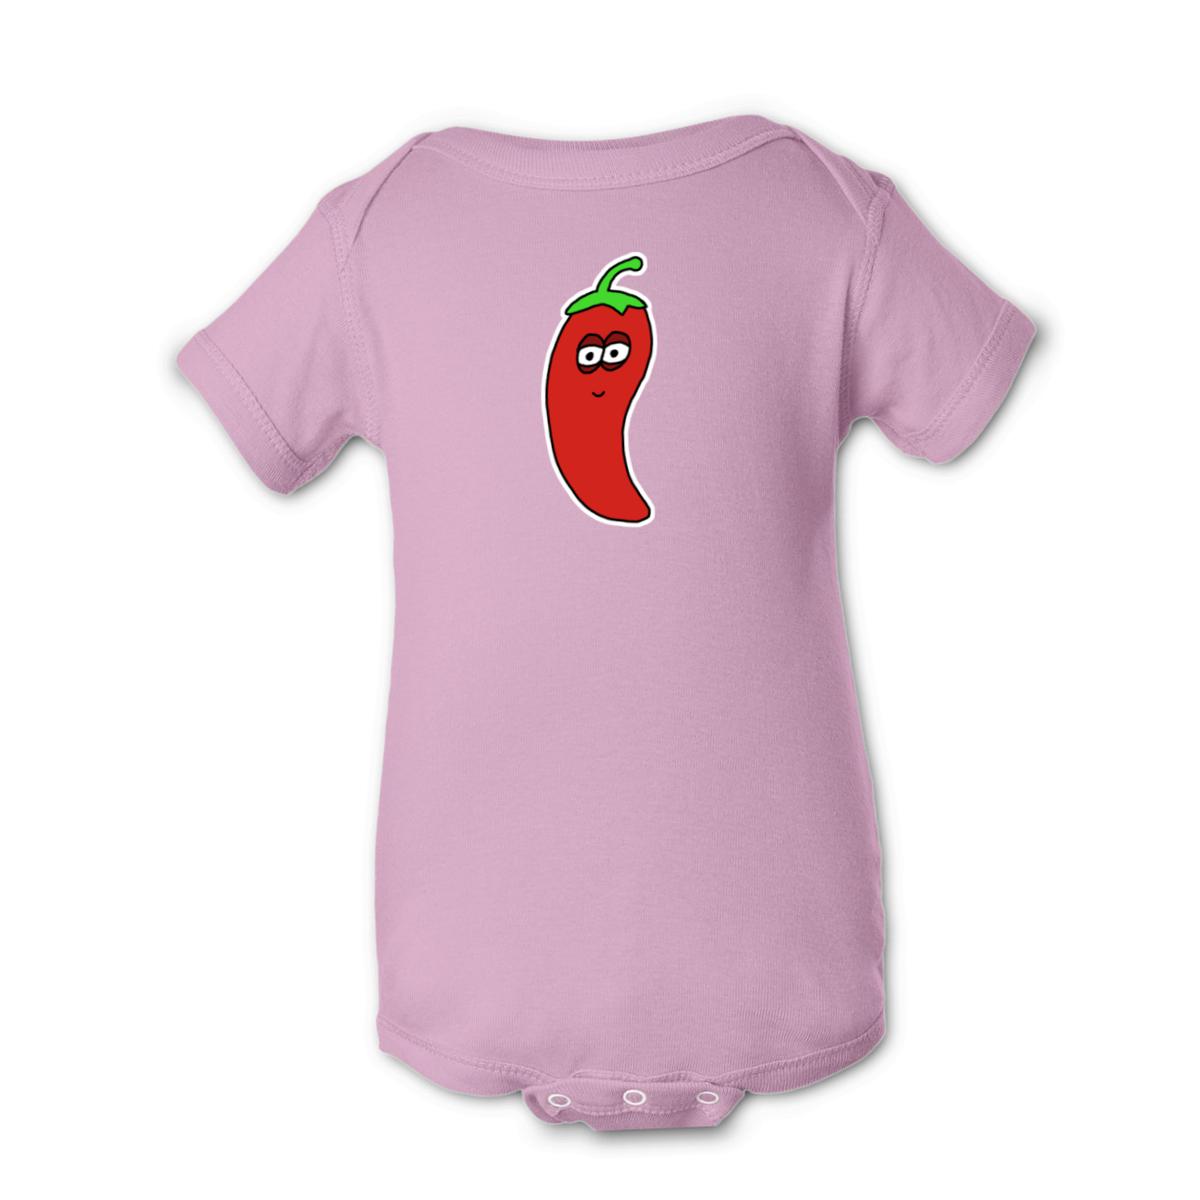 Chili Pepper Onesie 6M pink